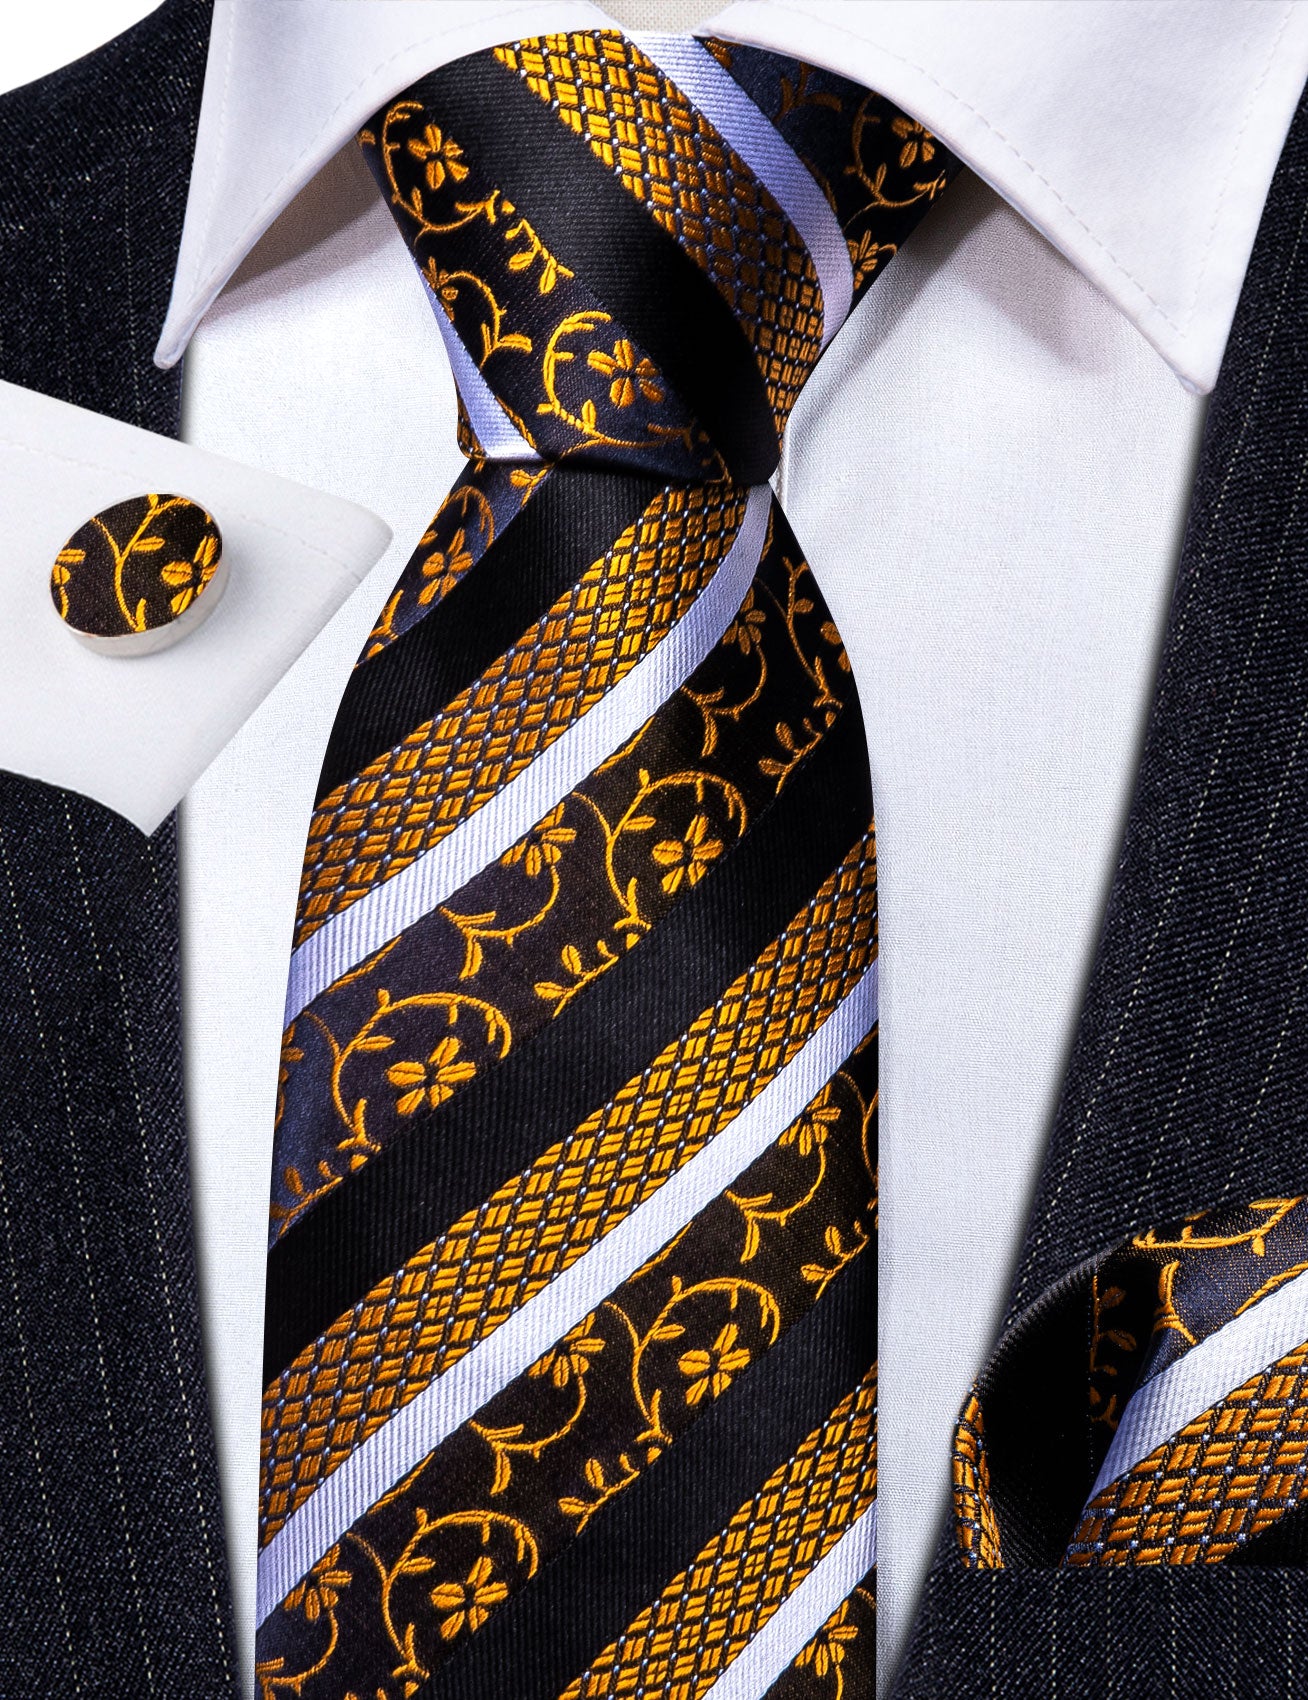 Barry.wang Black Tie Gold Striped Floral Silk Tie Handkerchief Cufflinks Set